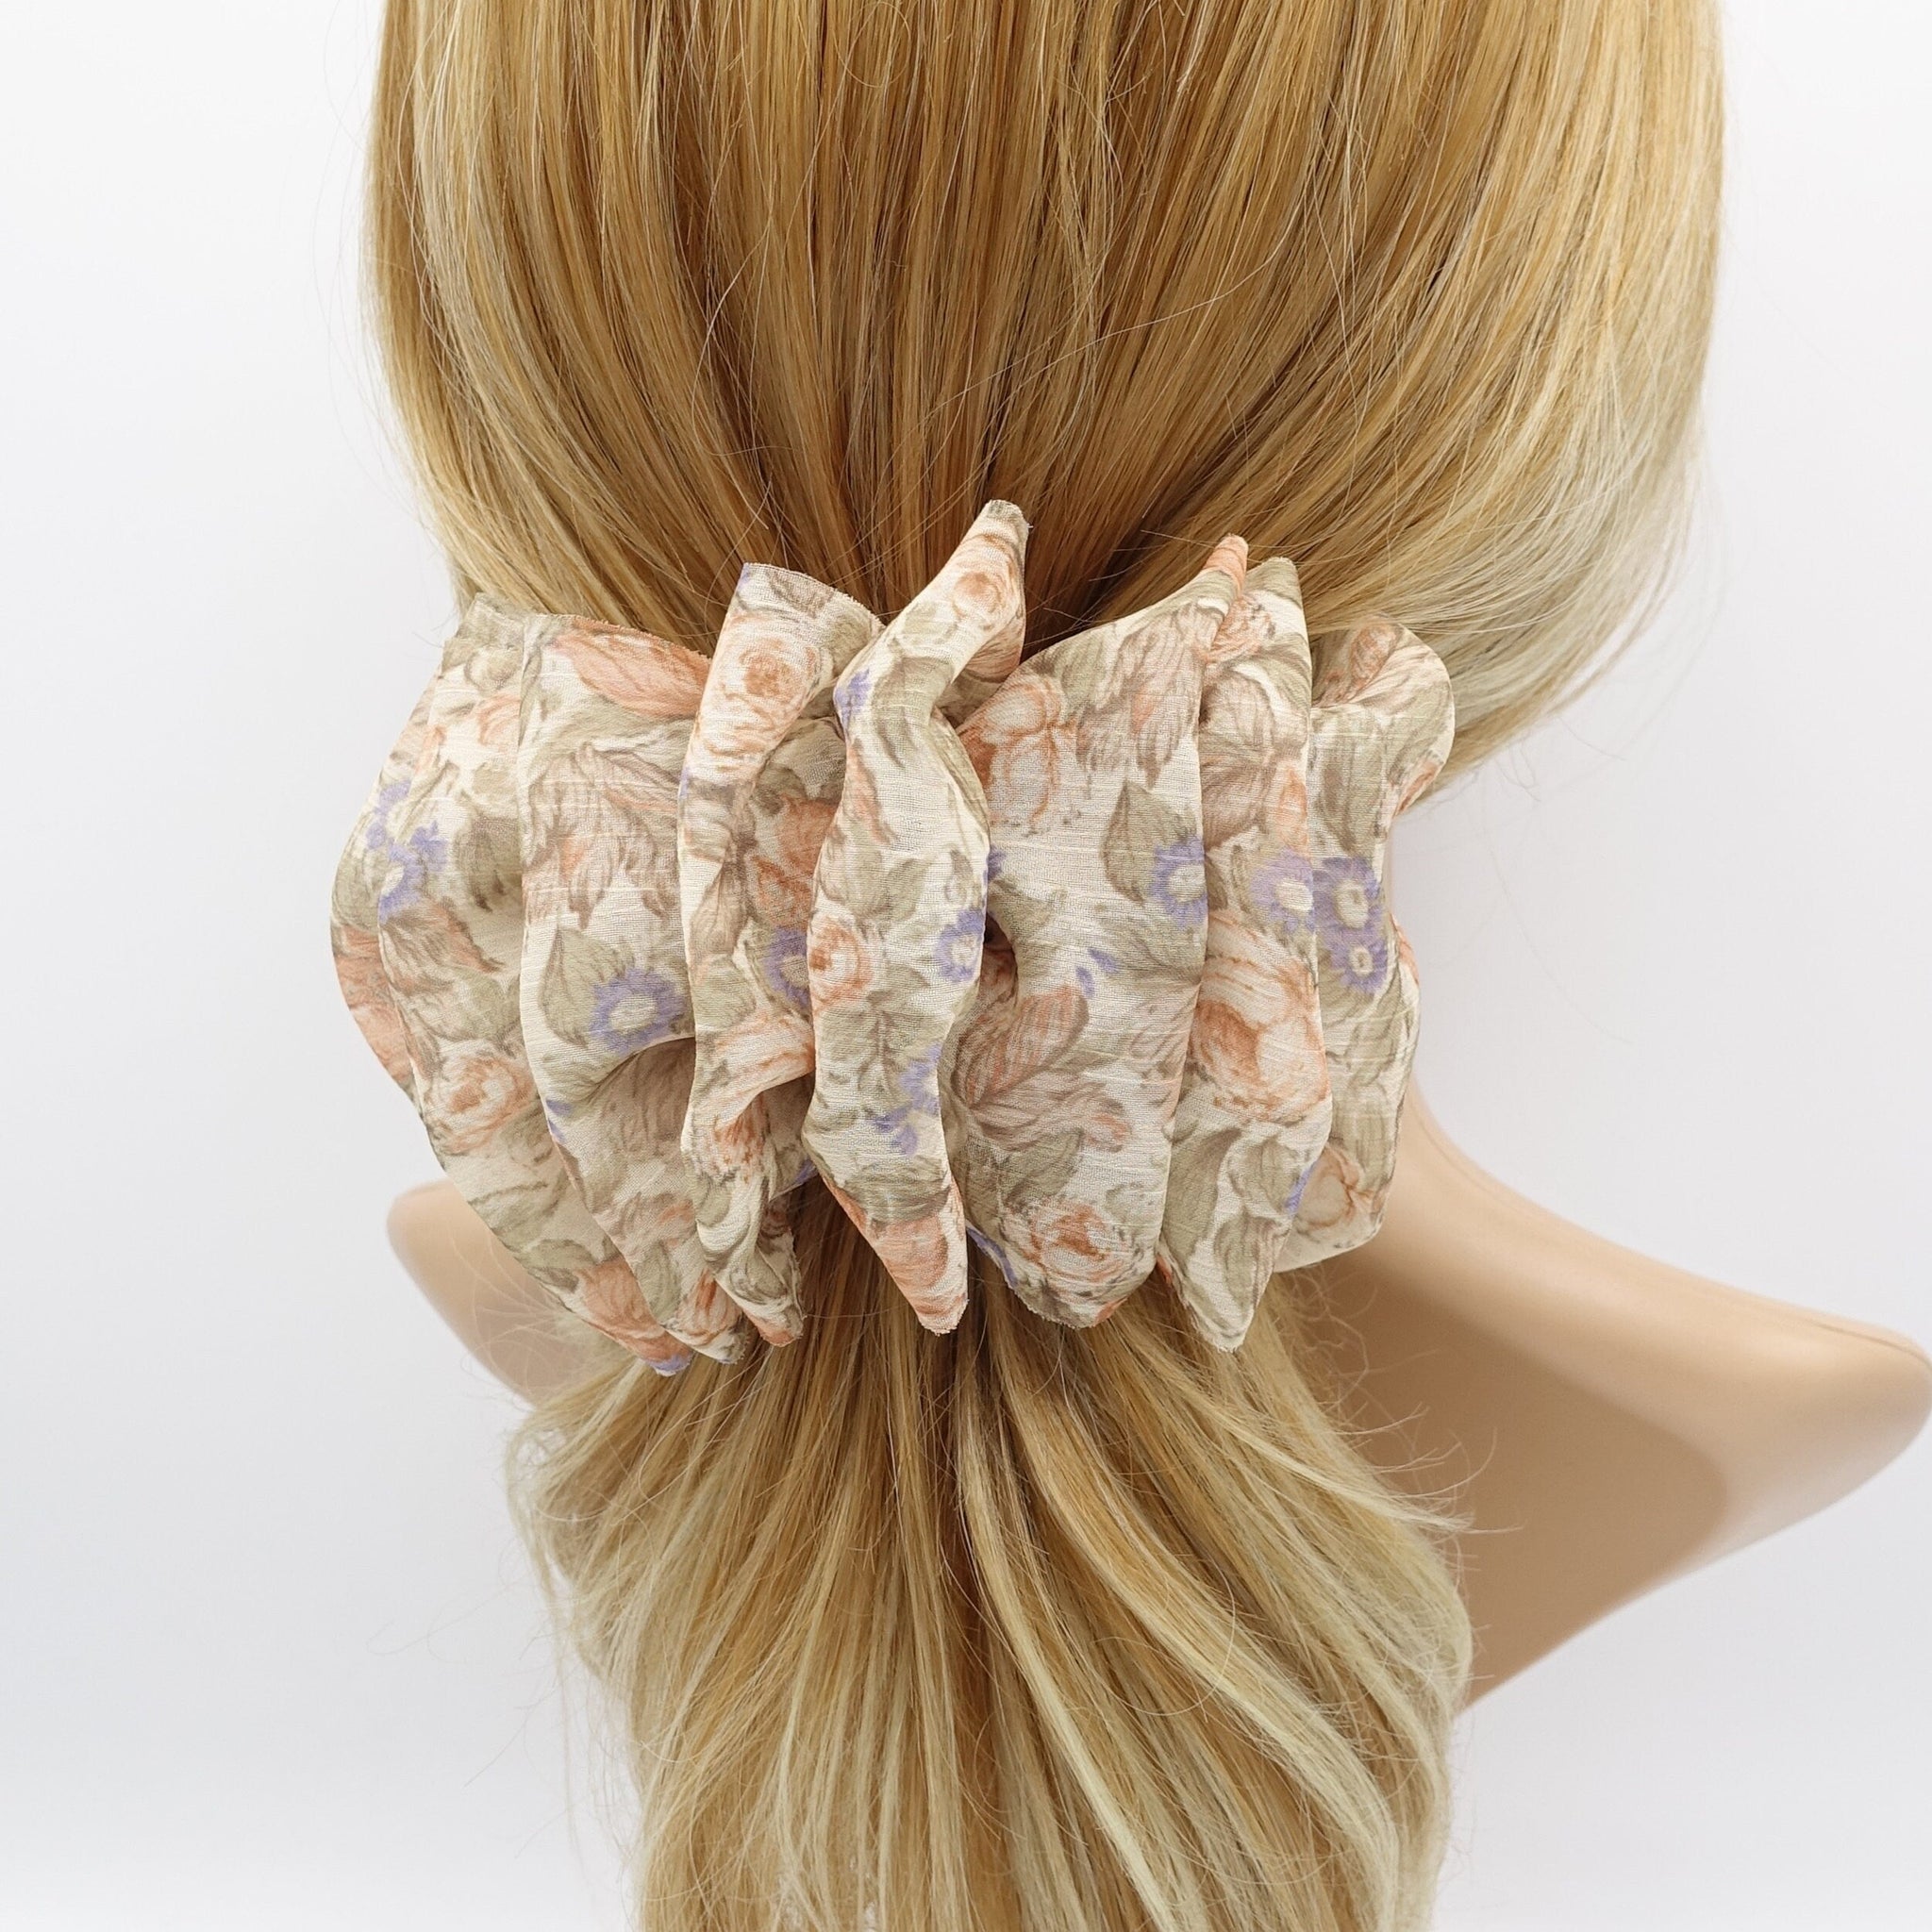 veryshine.com Barrette (Bow) Beige florl chiffon ruffle flower hair barrette woman hair accessory